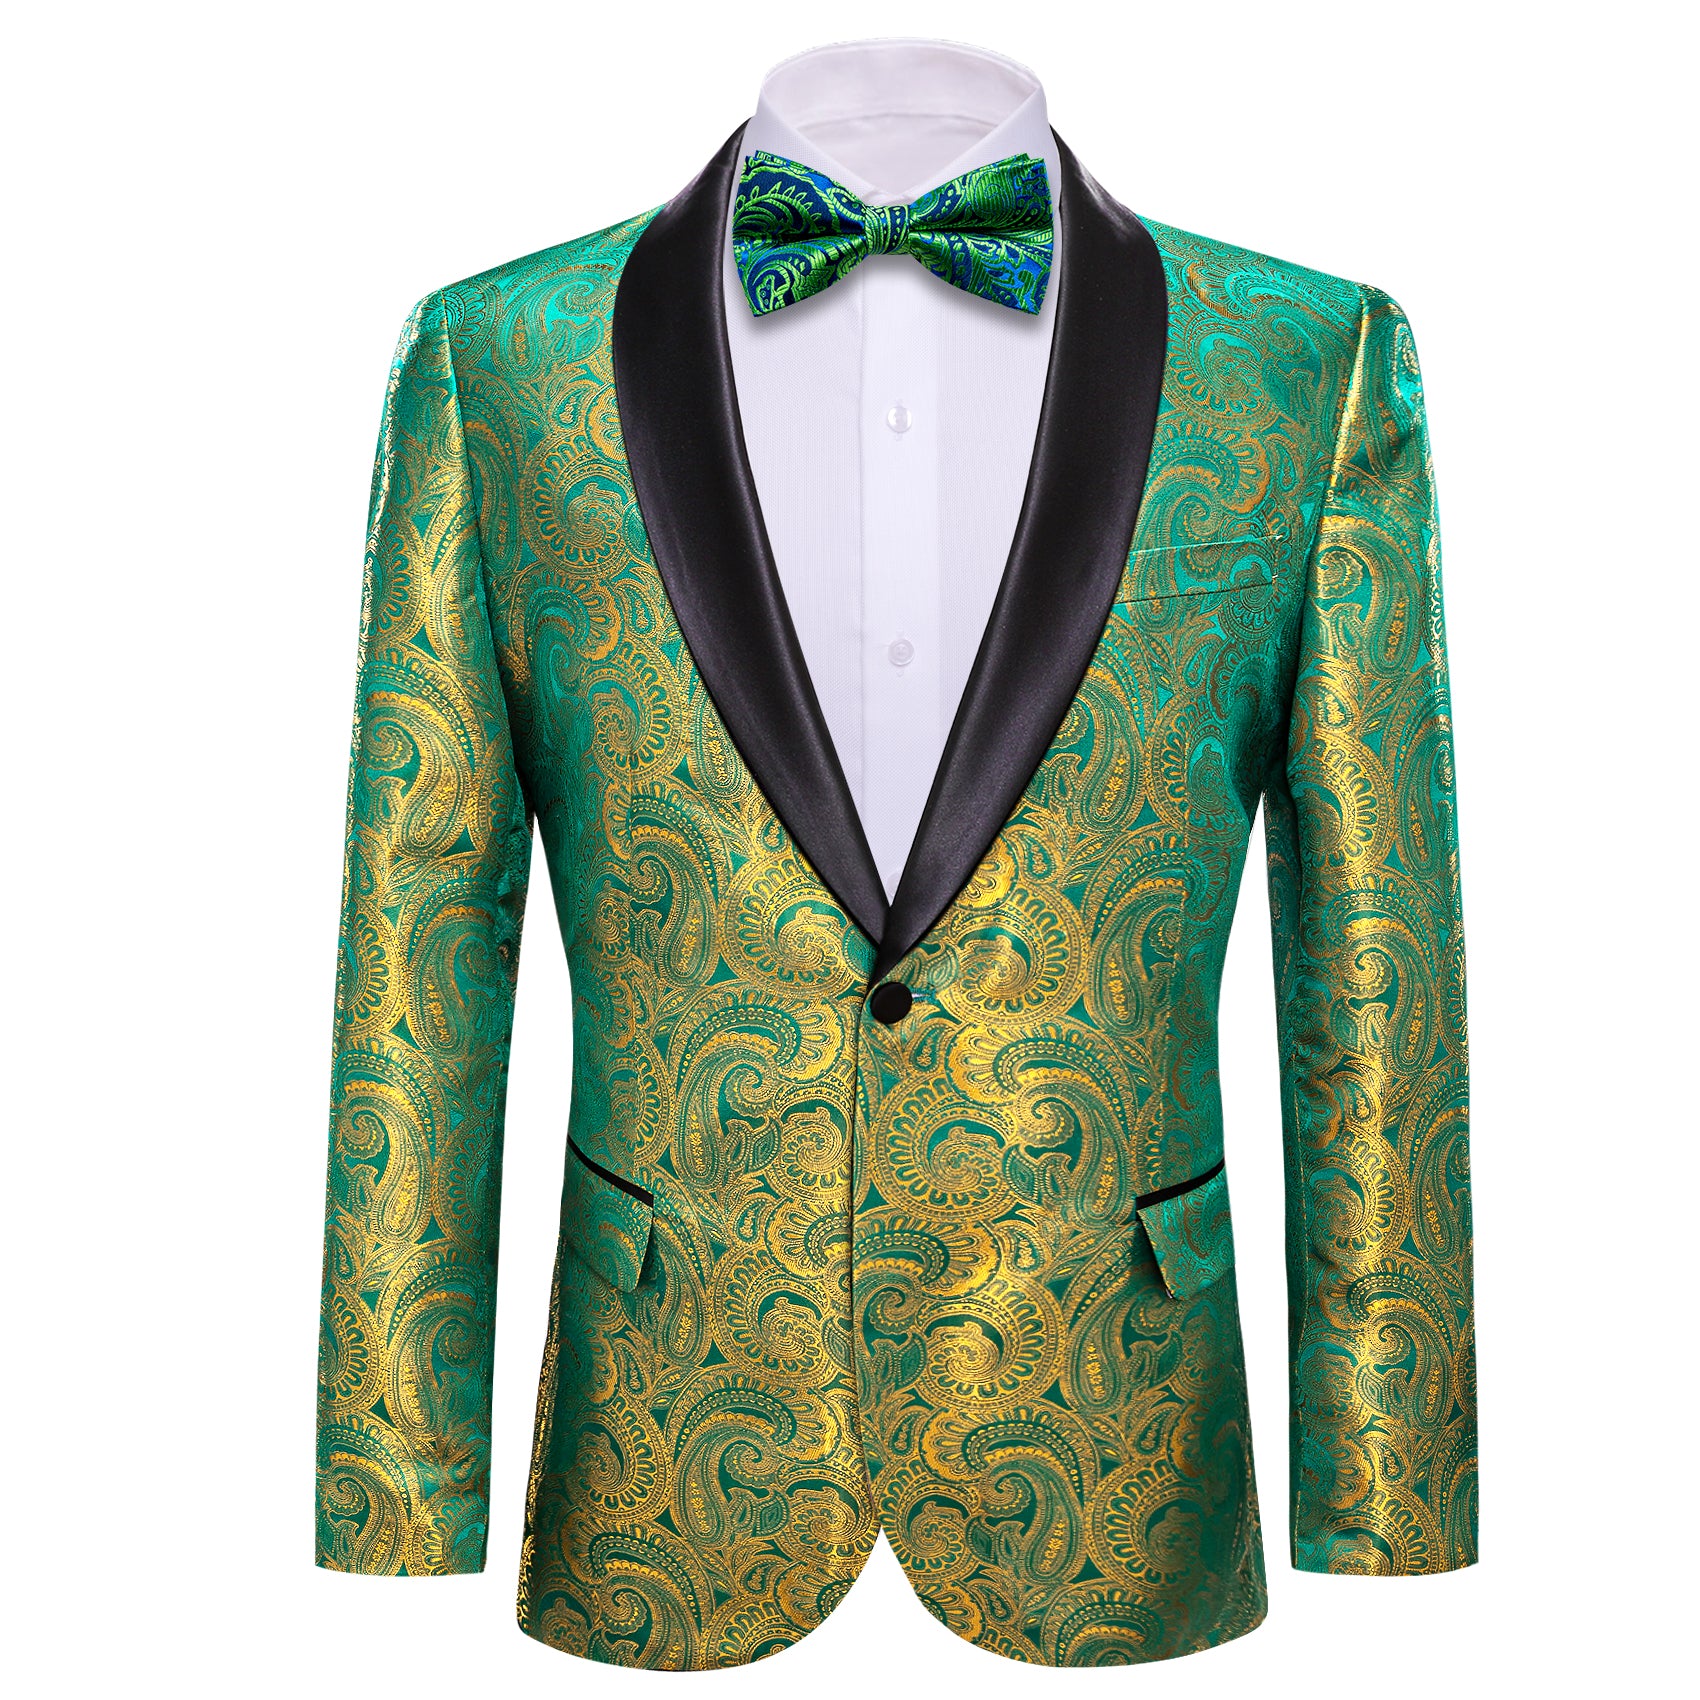 Men's Bright Green Floral Suit Jacket